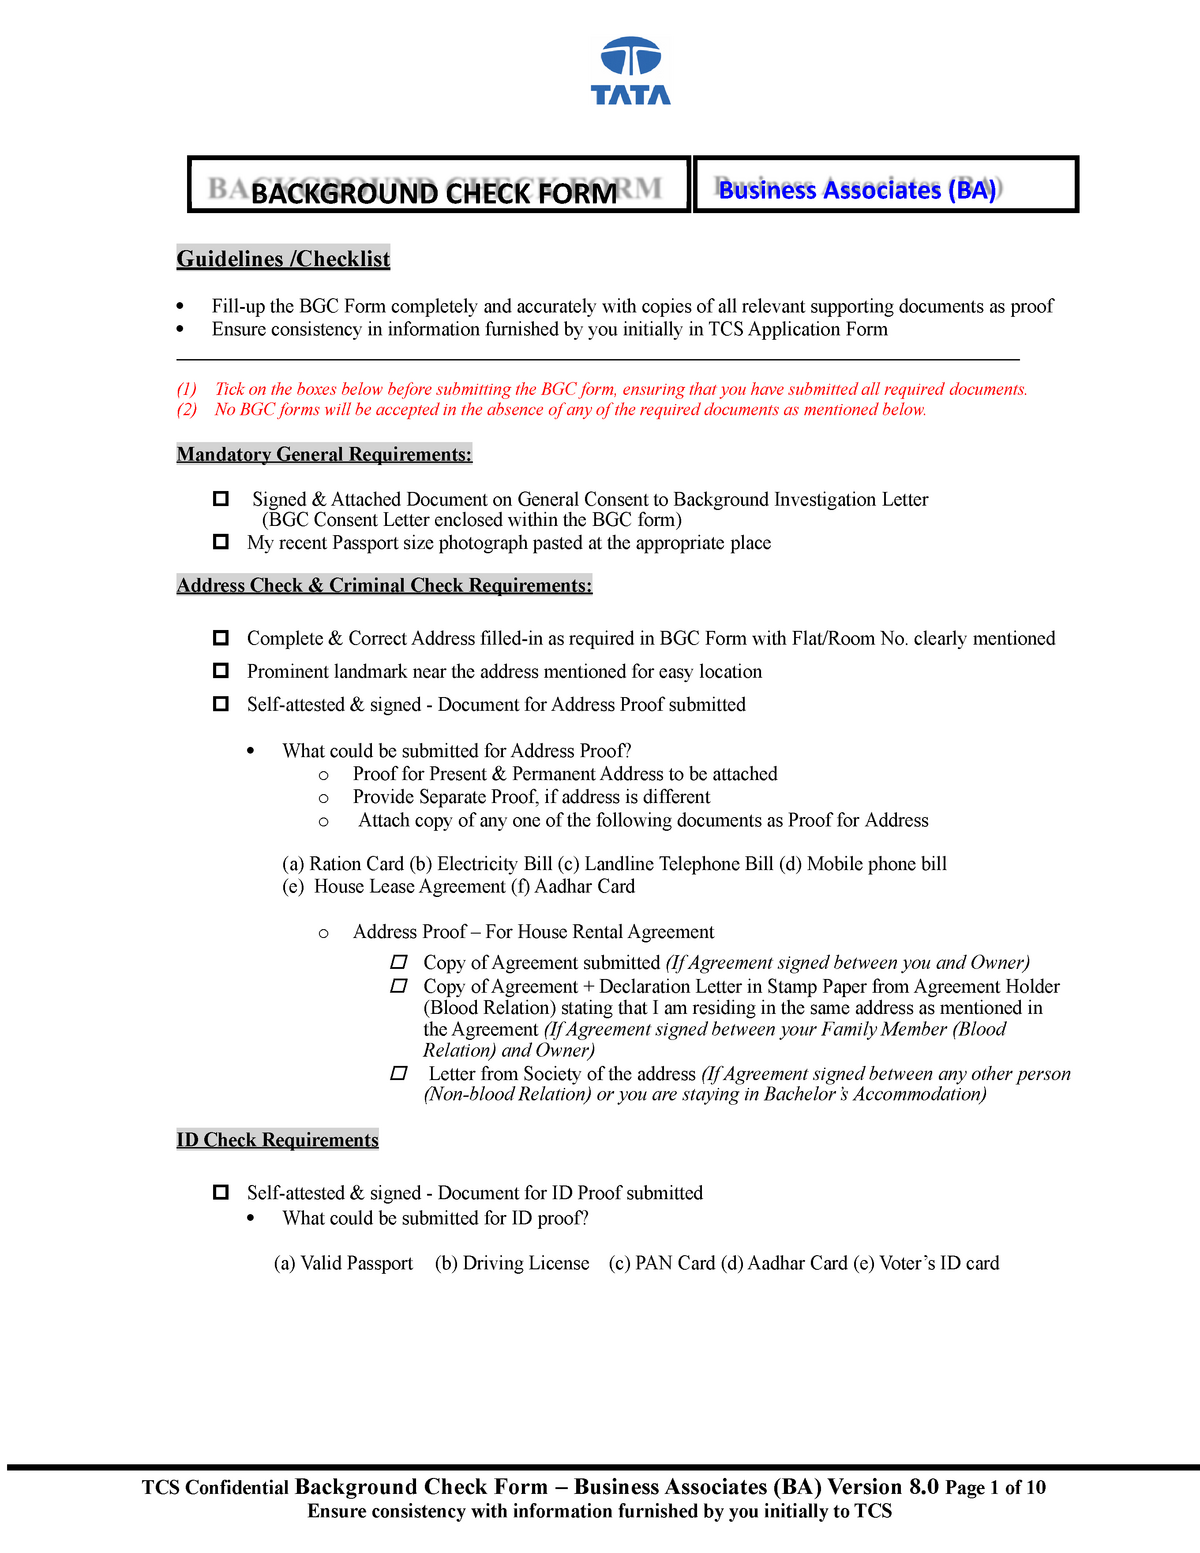 Sample New BGC form Version 8 hbsdhshdhsgdhsgdhgshdgh - TCS Confidential  Background Check Form – - Studocu